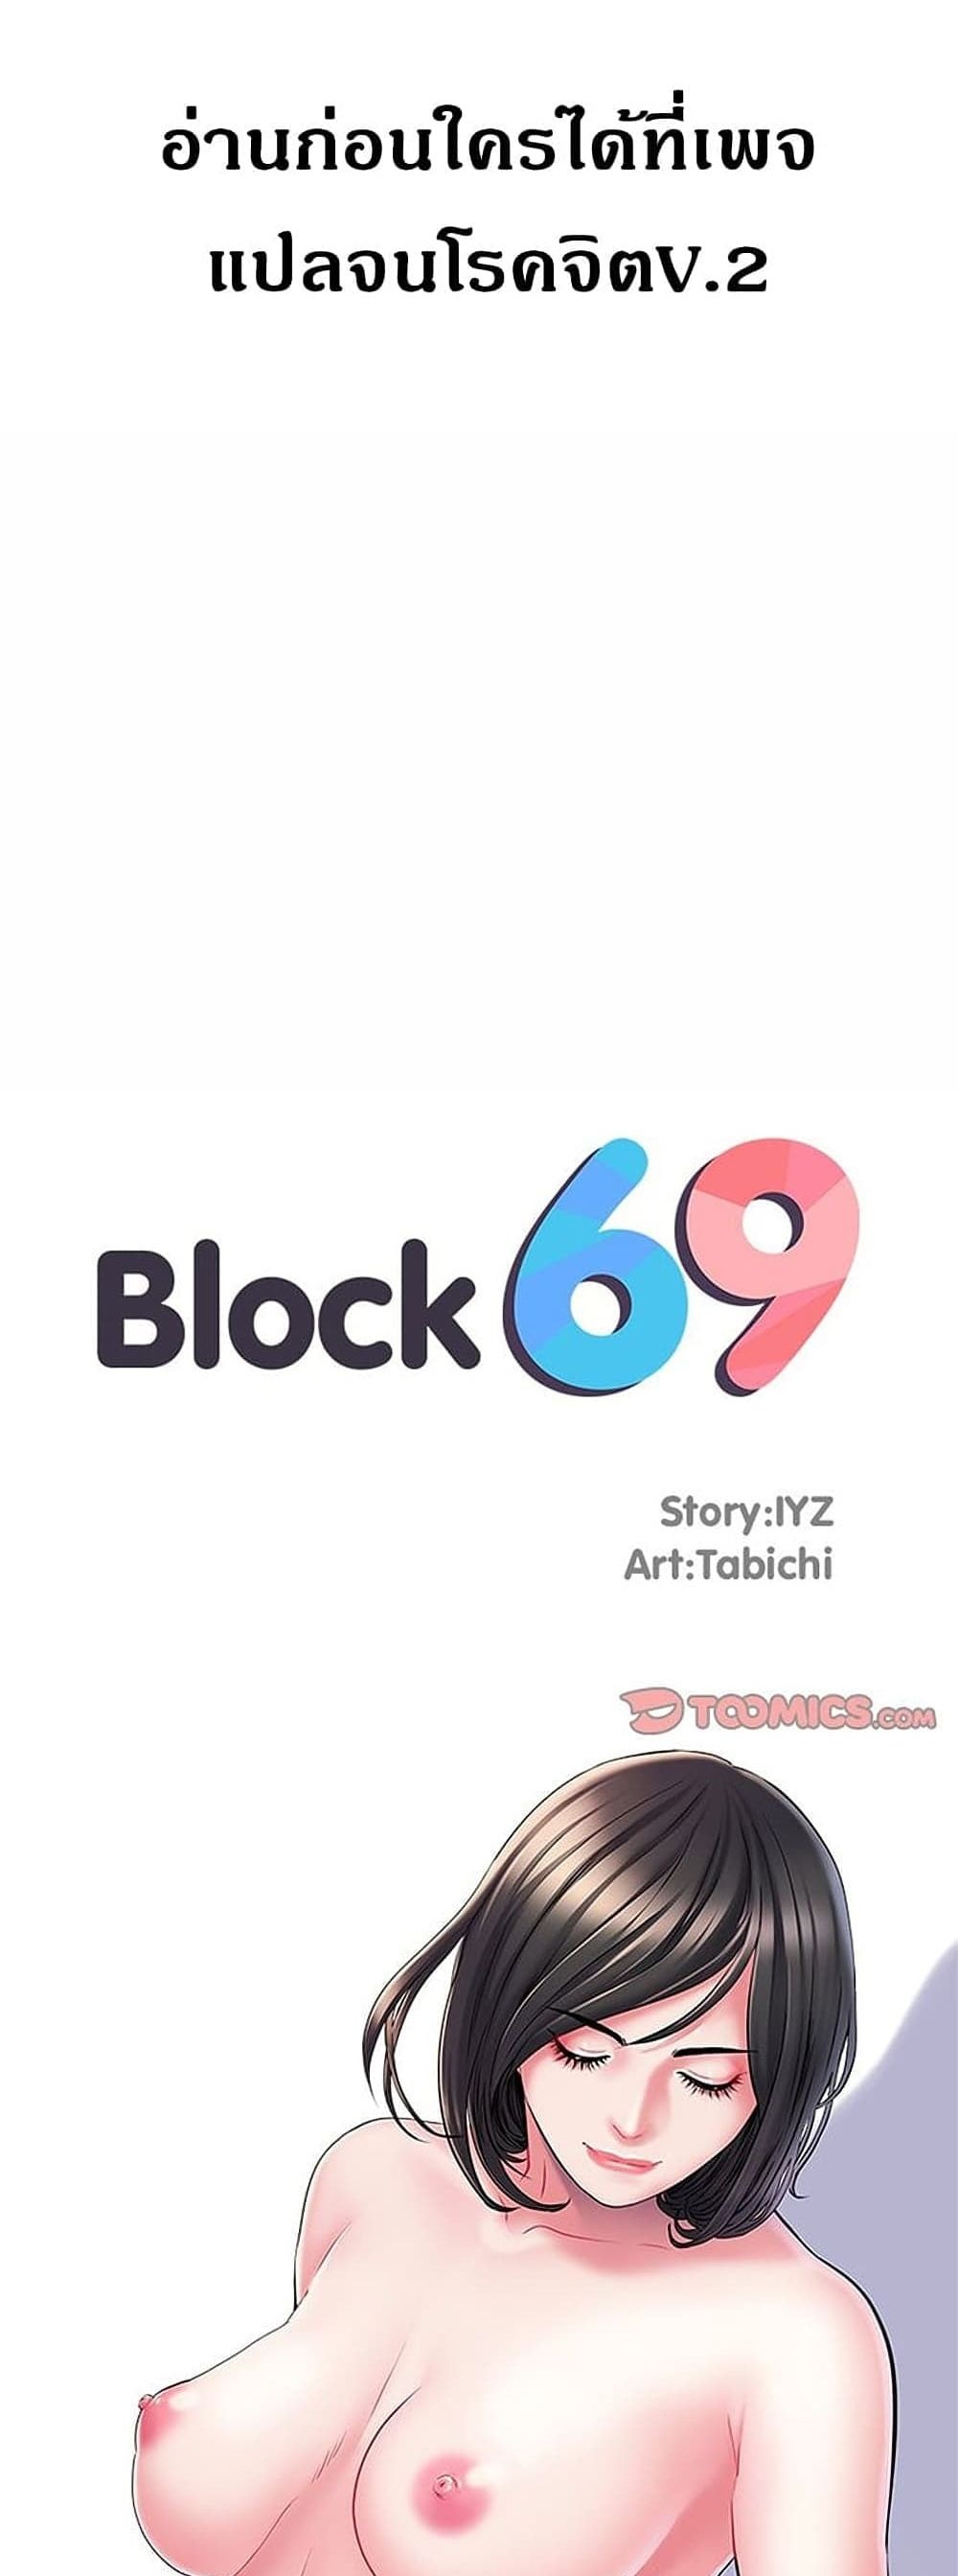 Block 6901